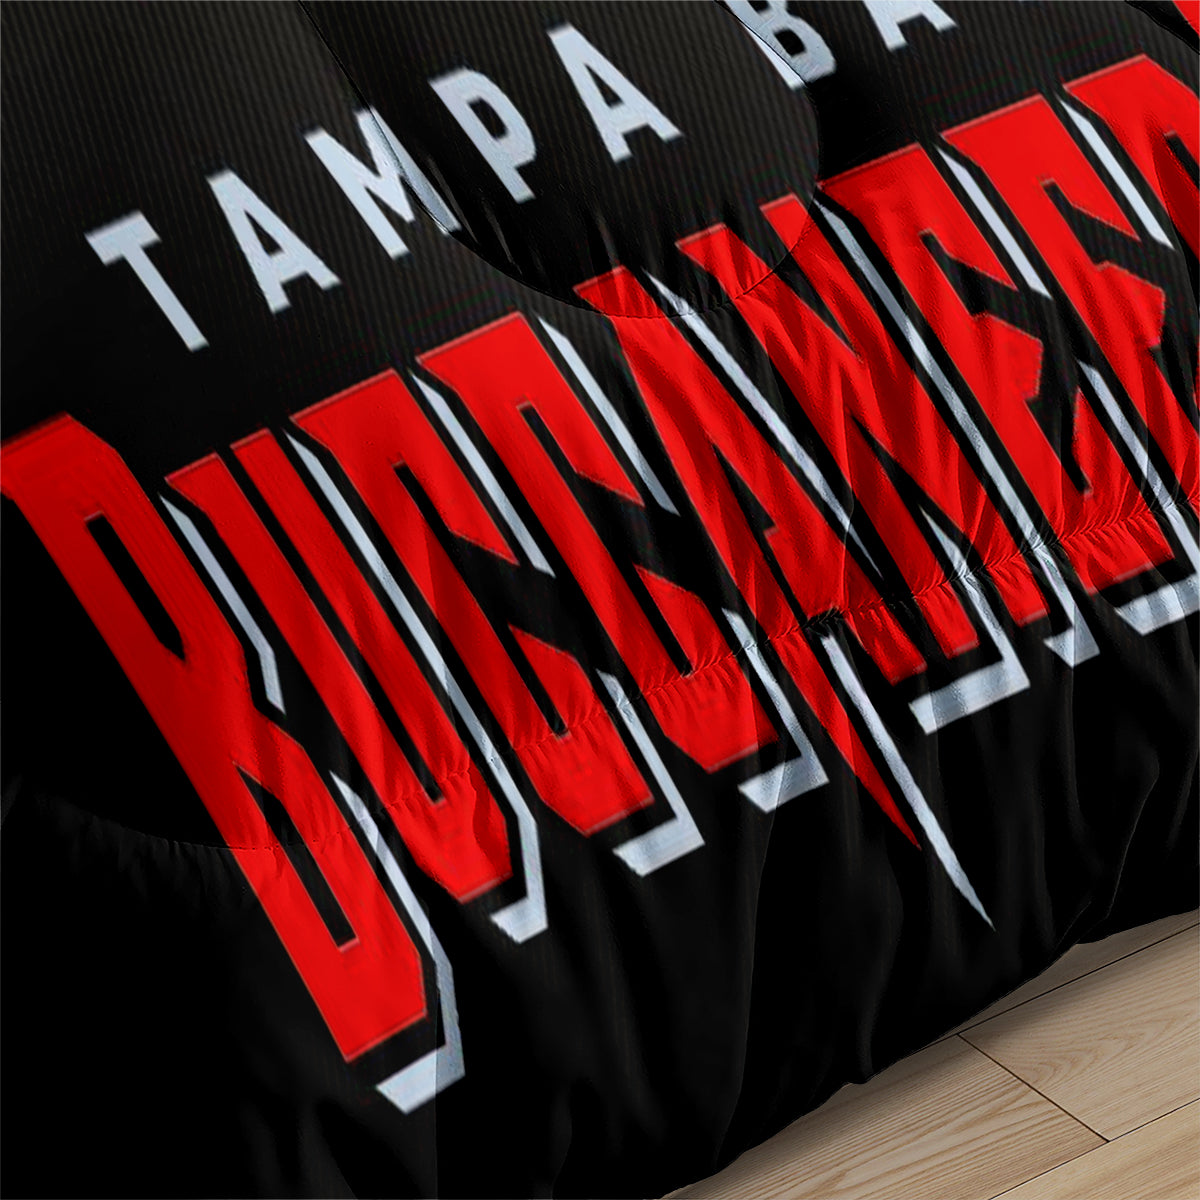 Tampa Bay Buccaneers Football Team Comforter Pillowcase Sets Blanket All Season Reversible Quilted Duvet